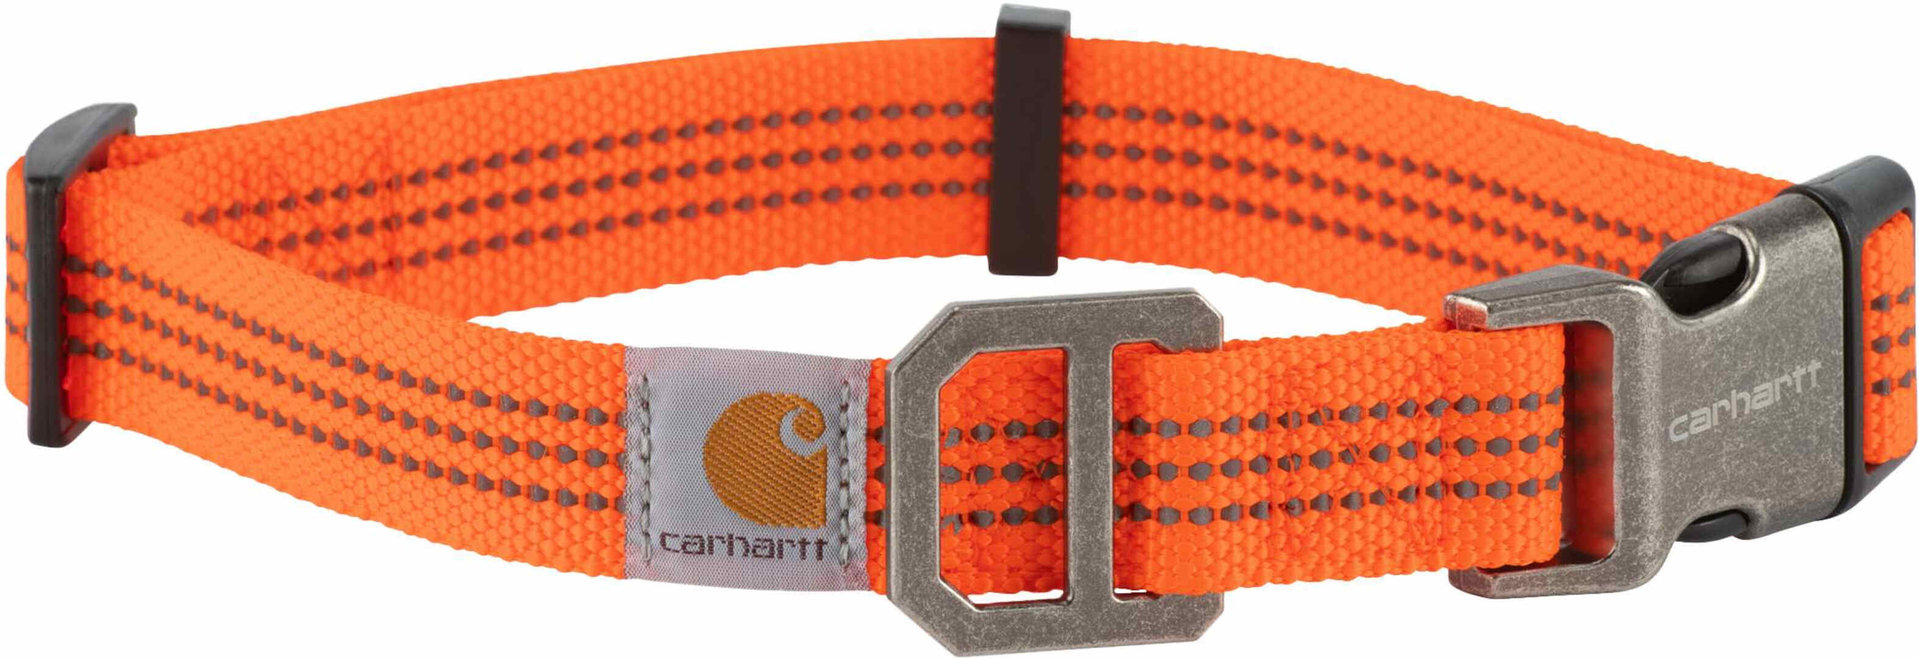 Carhartt Tradesman Hundehalsband, orange, Größe L